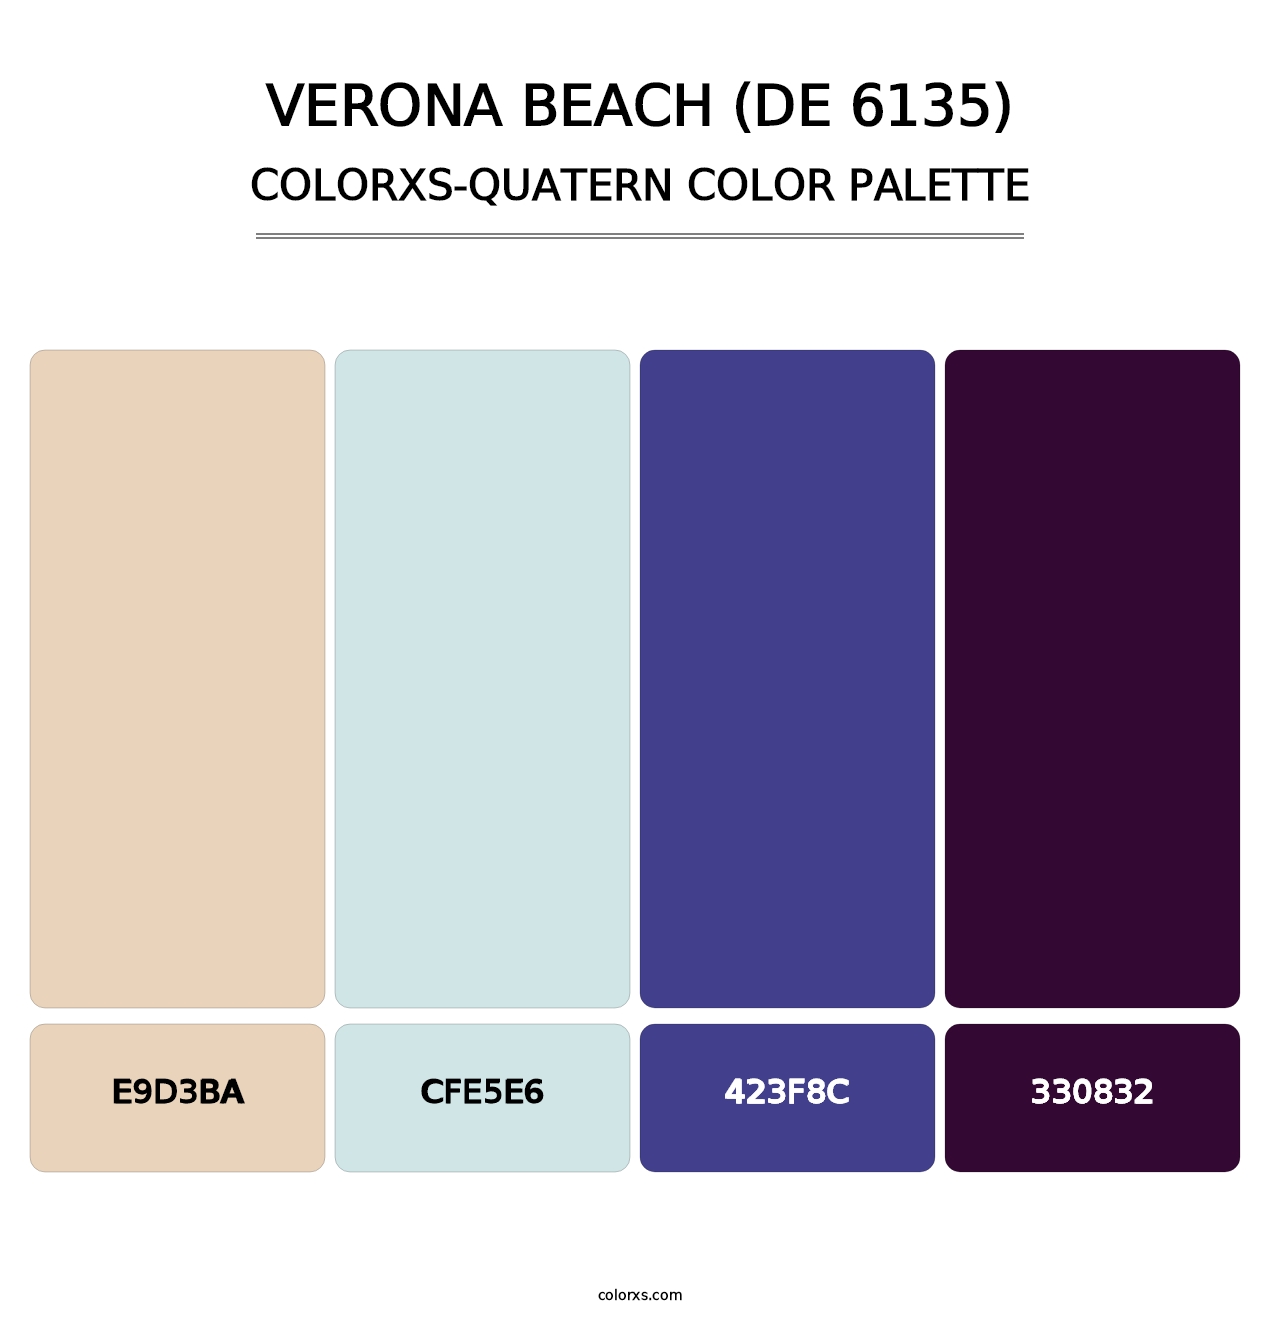 Verona Beach (DE 6135) - Colorxs Quatern Palette